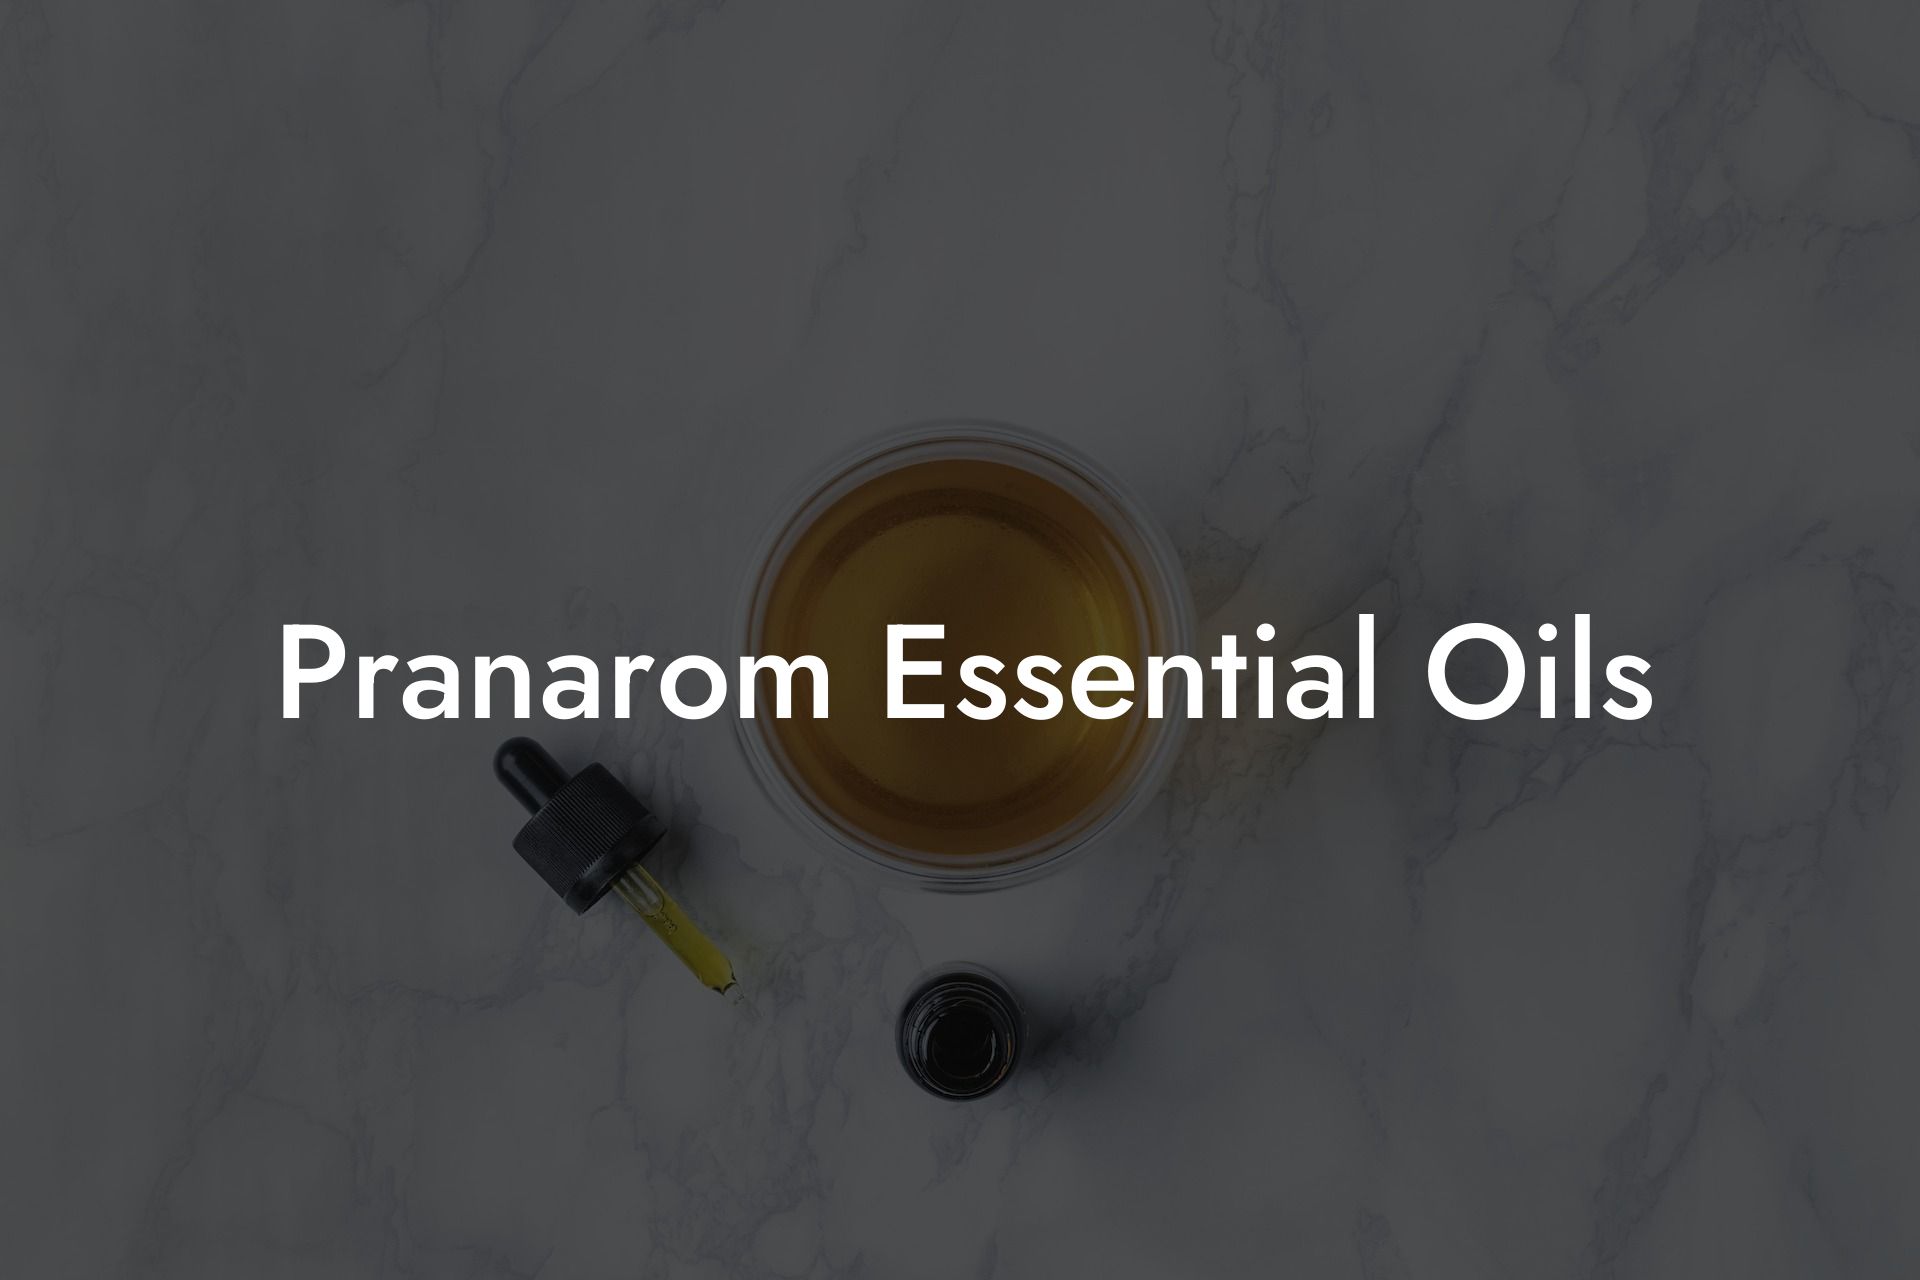 Pranarom Essential Oils